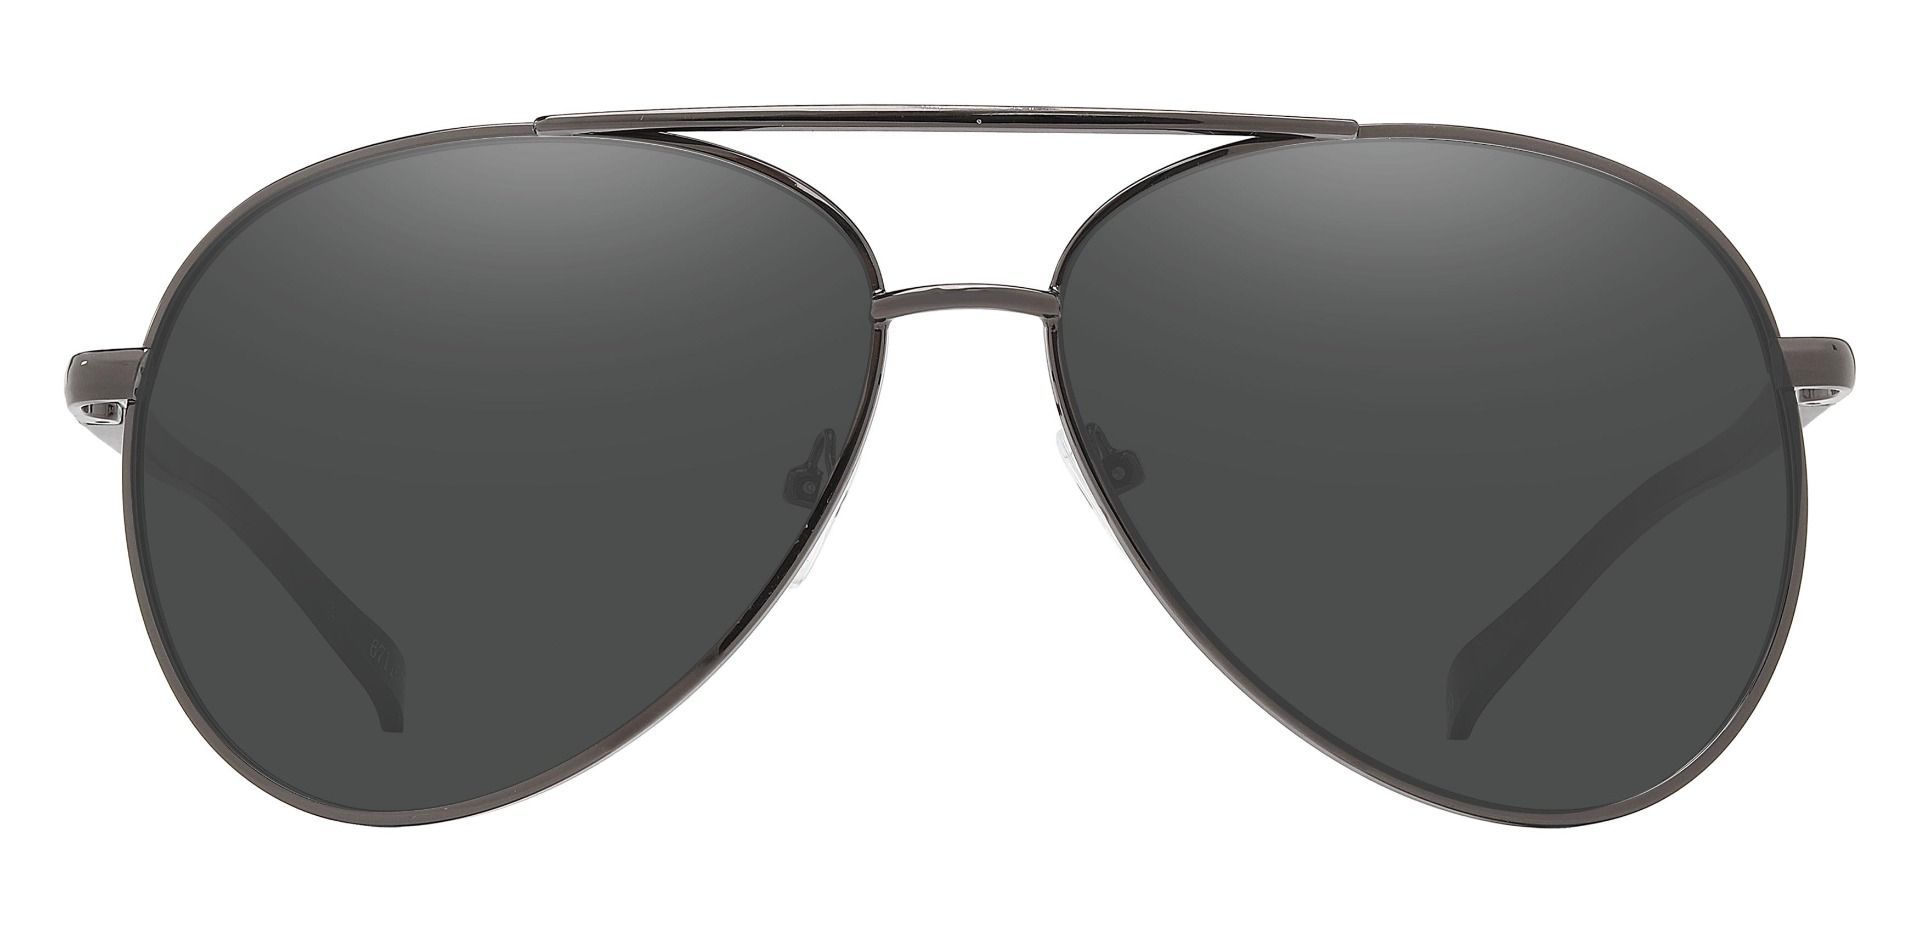 Marius Aviator Reading Sunglasses - Gray Frame With Gray Lenses